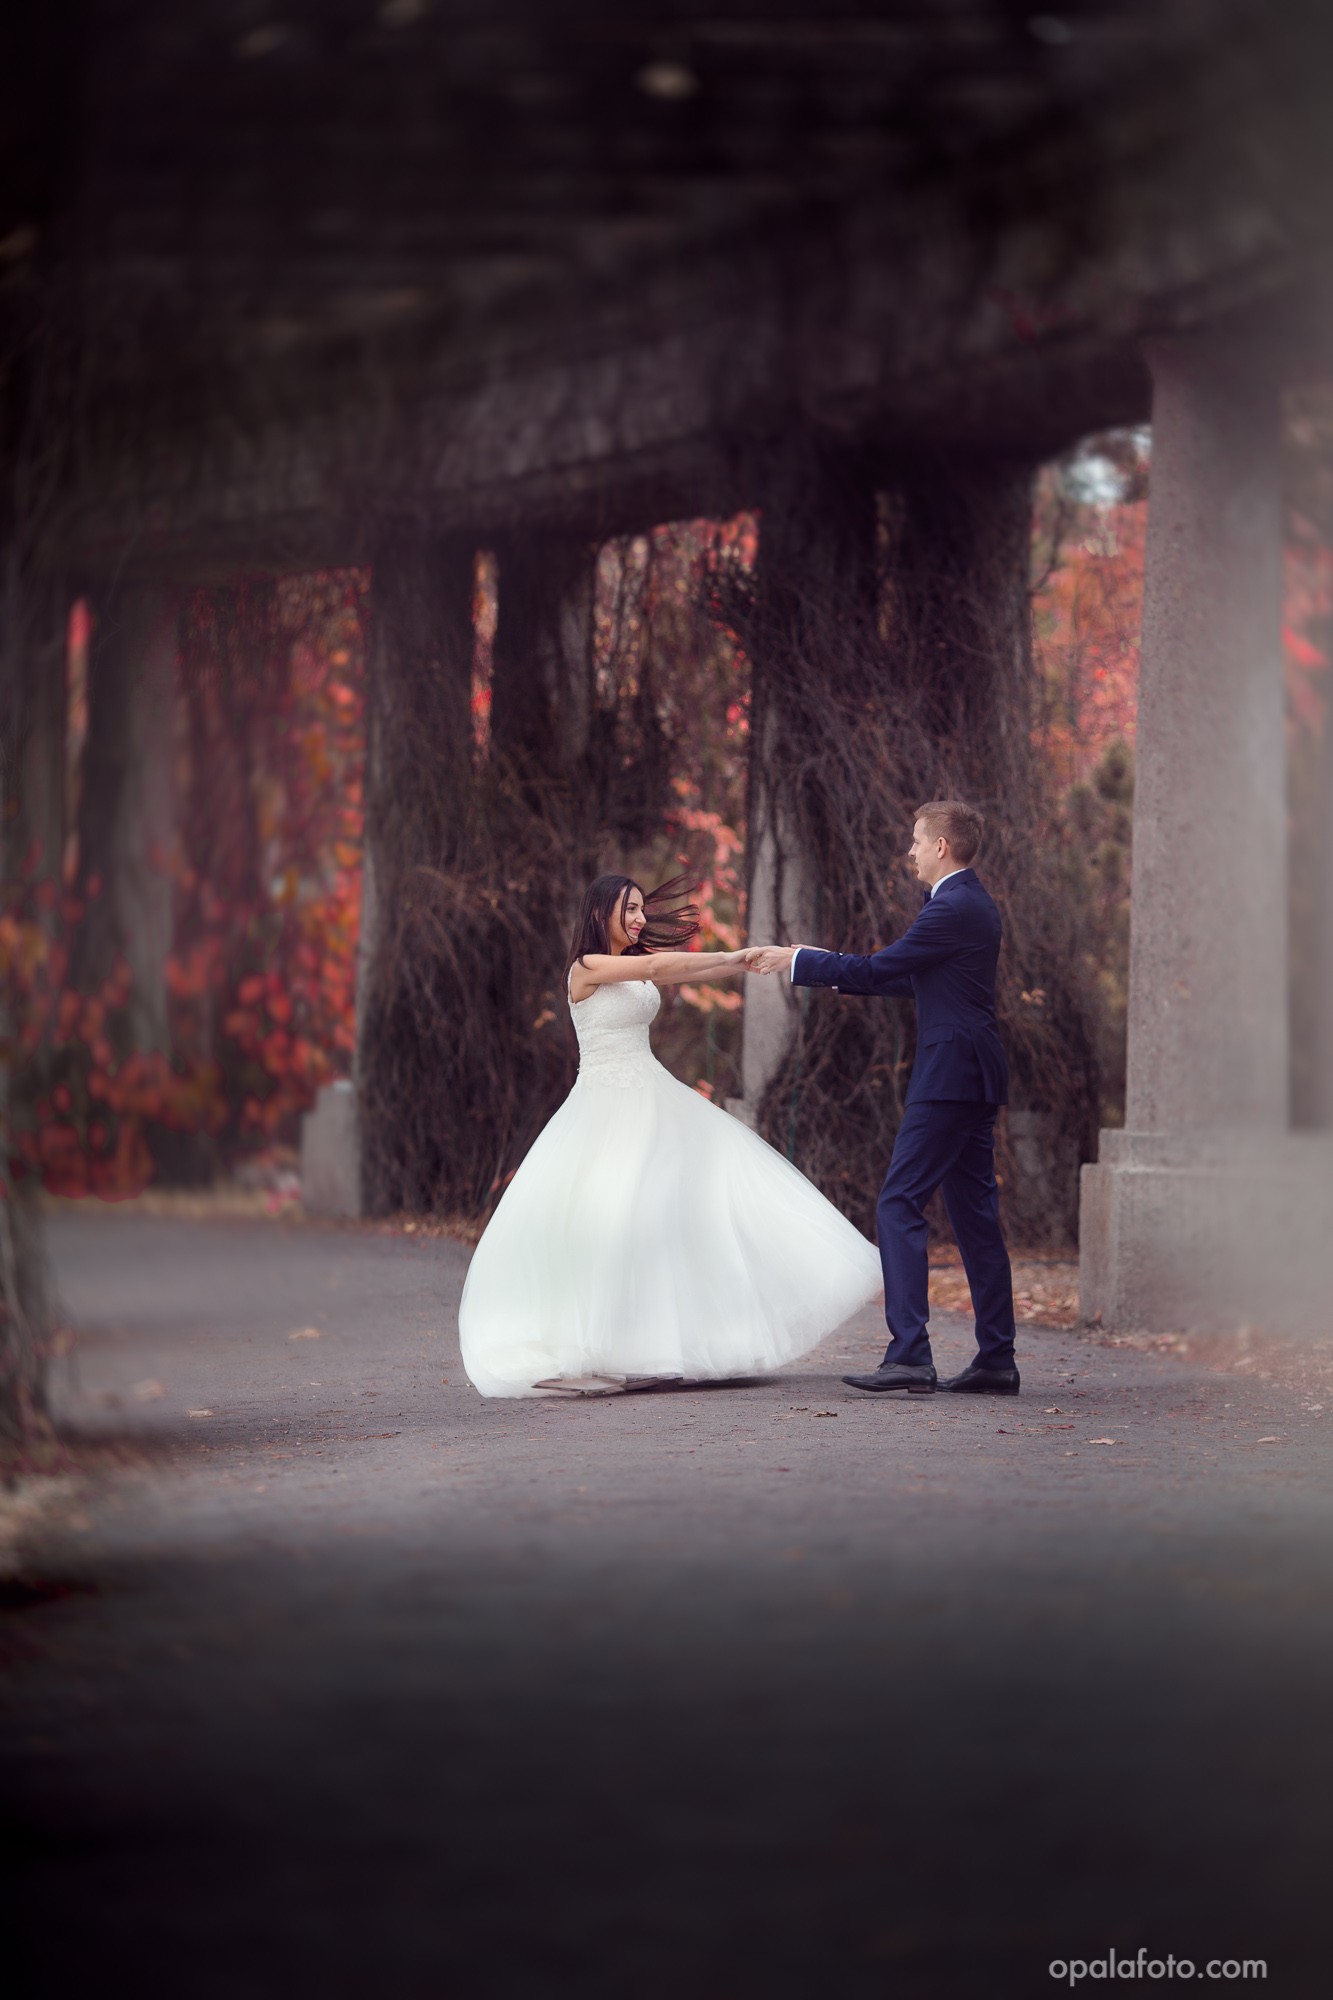 fotograf wroclaw opalafotocom portfolio zdjecia slubne inspiracje wesele plener slubny sesja slubna